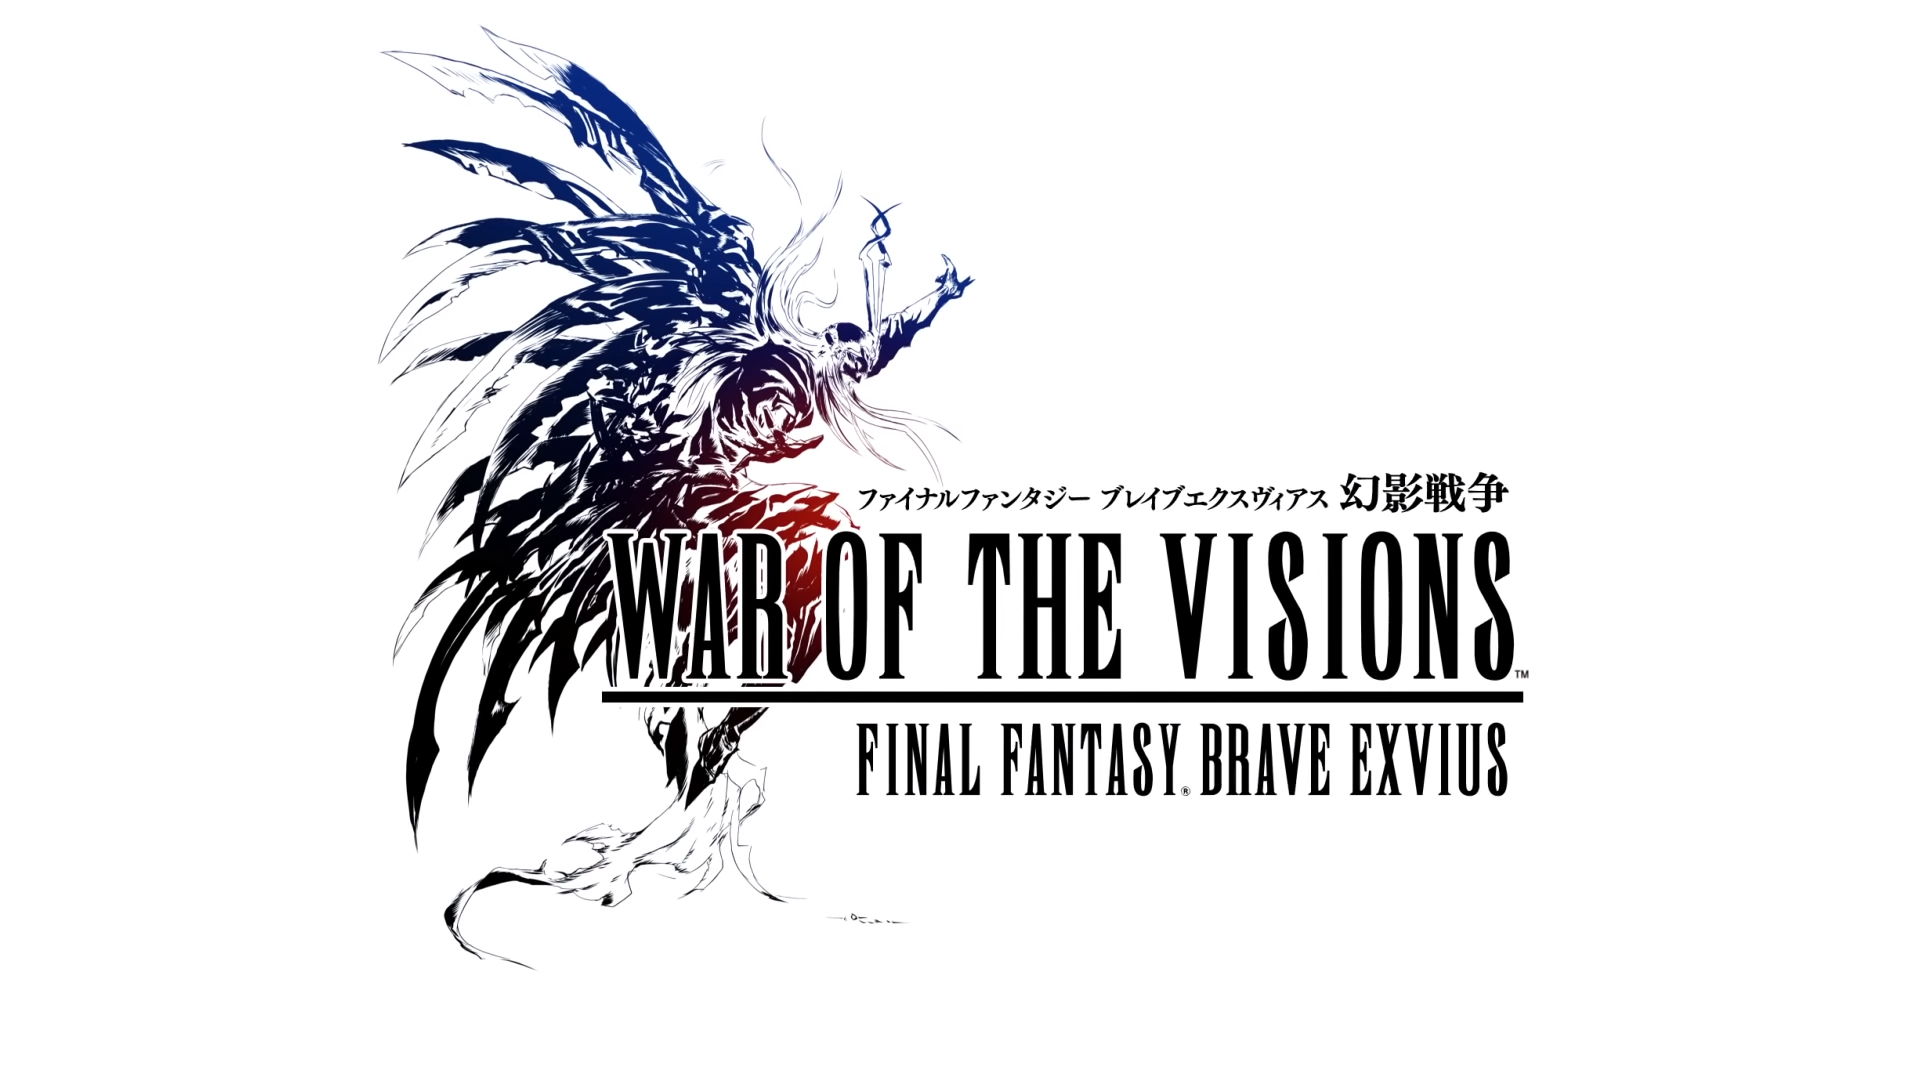 War of the Visions: Final Fantasy Brave Exvius